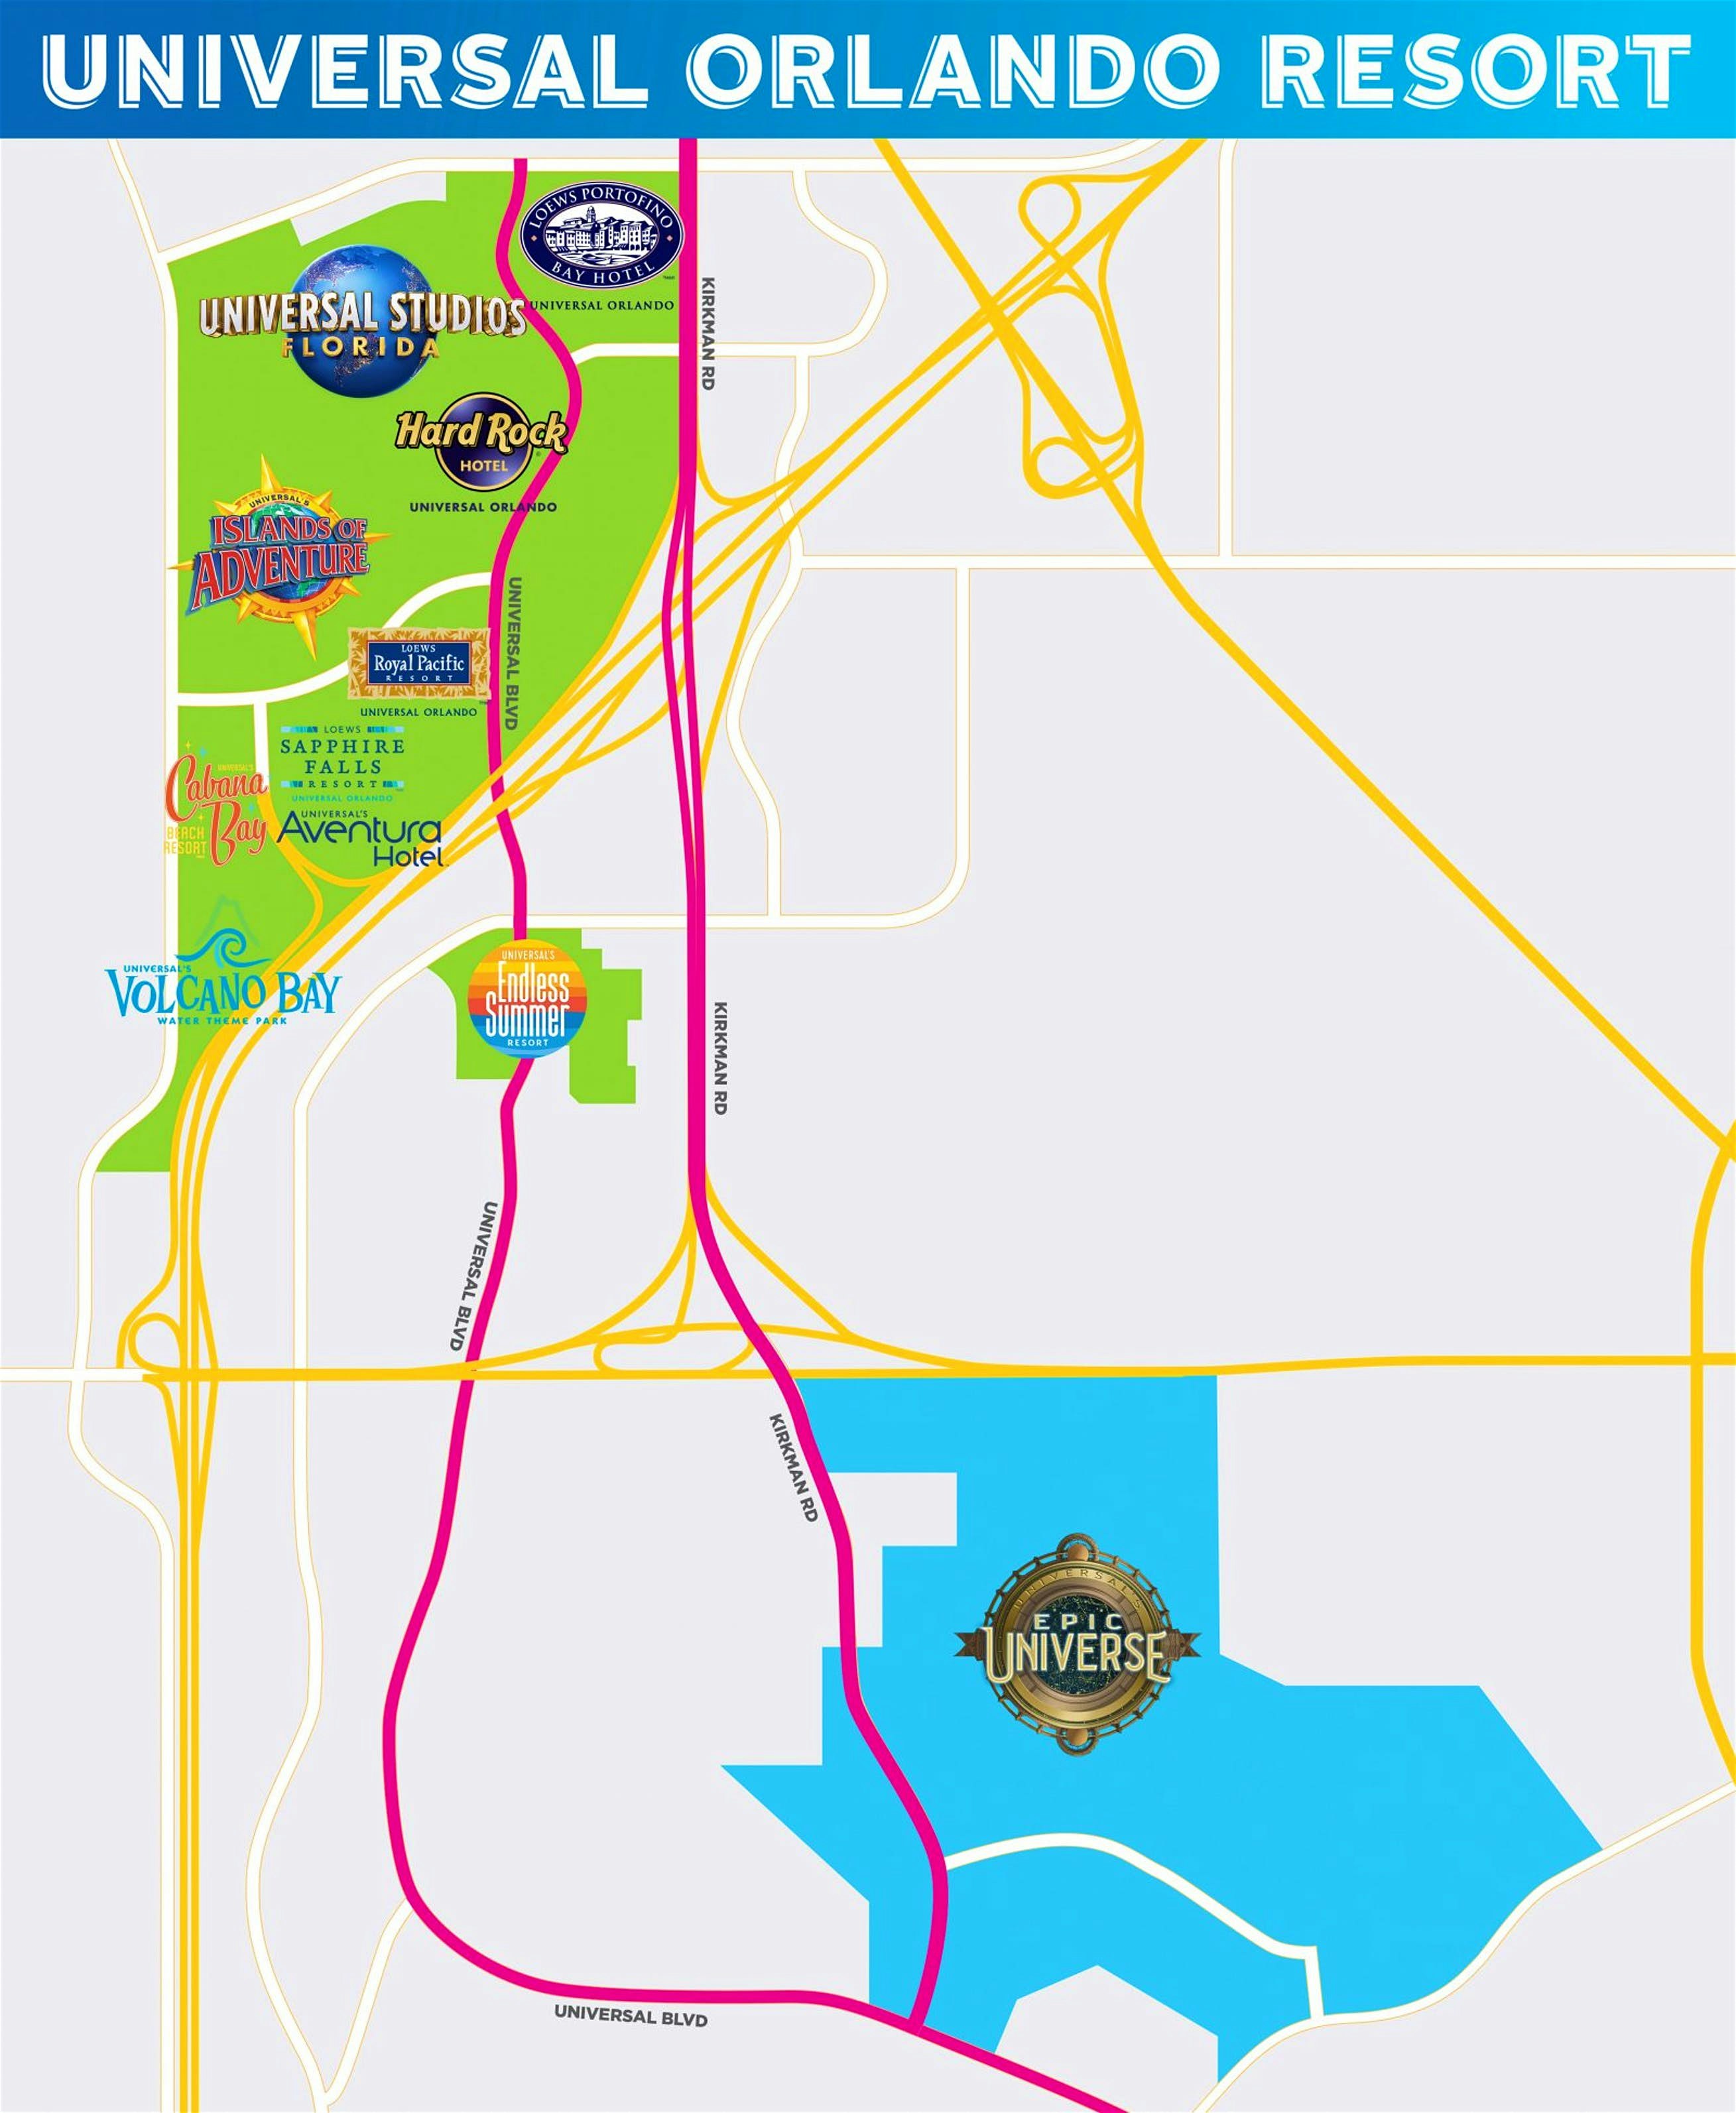 Map of Universal Orlando Resort's theme parks